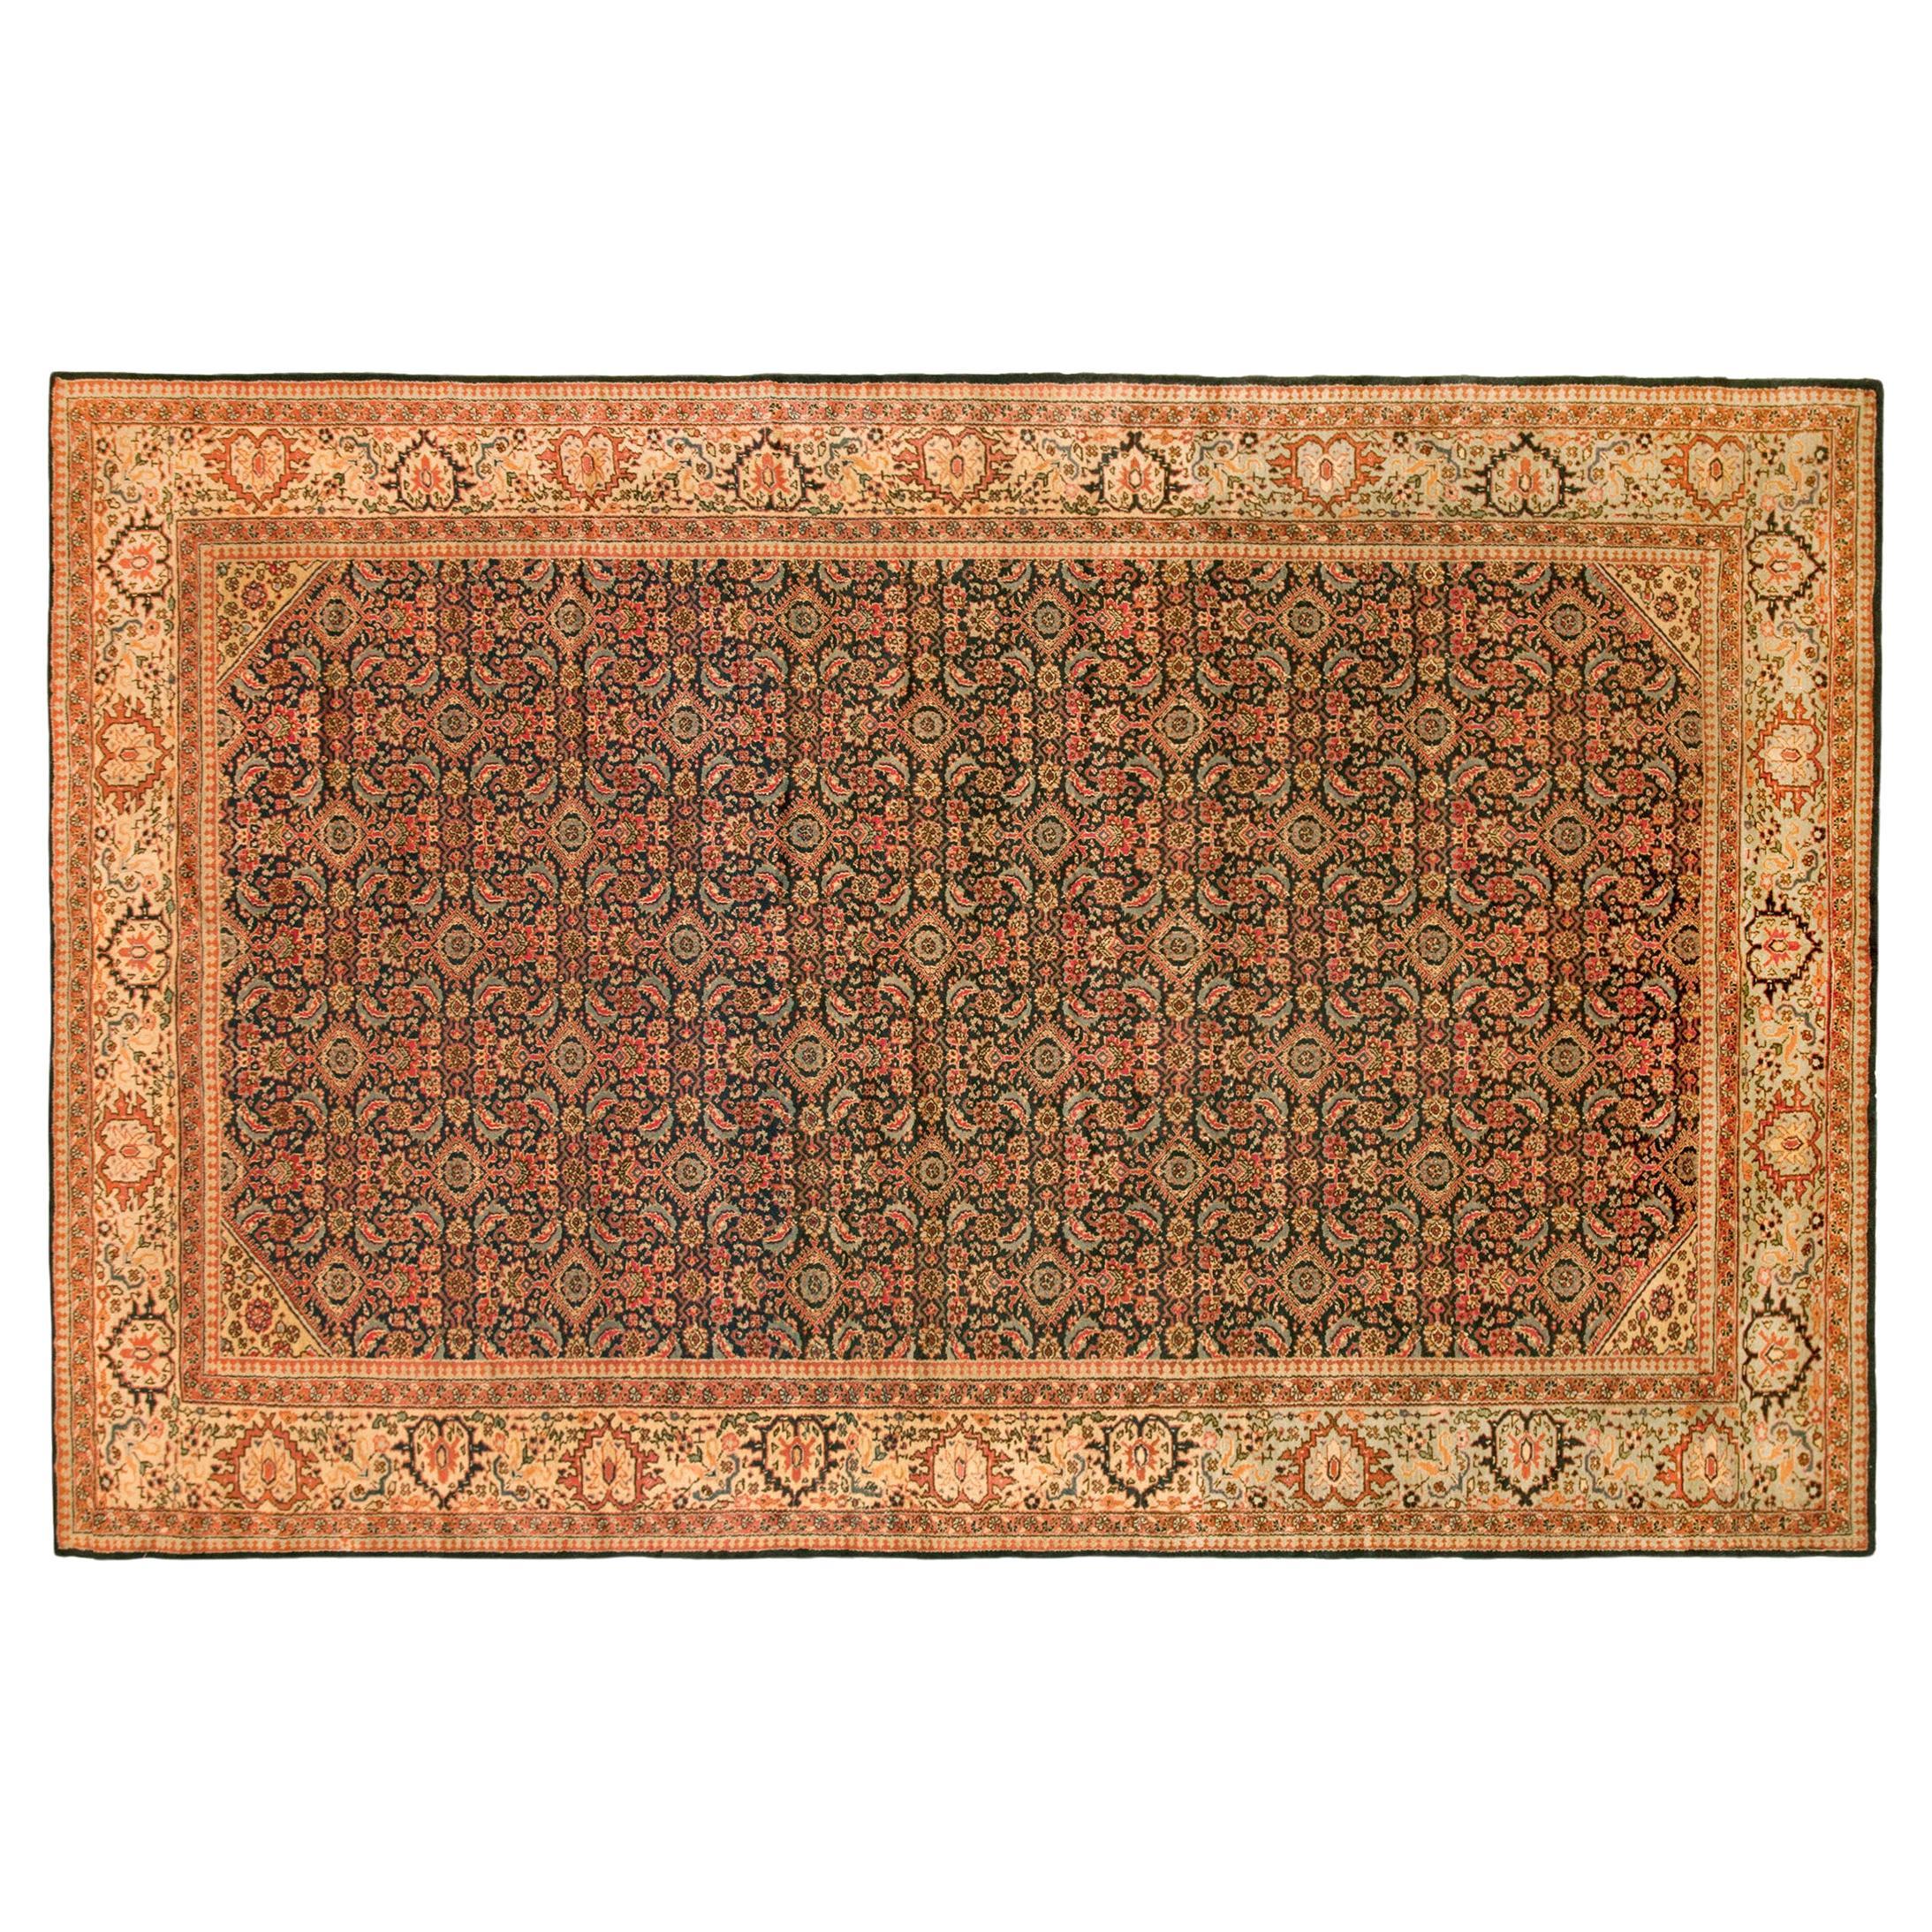 Antique Persian Tabriz Oriental Carpet in Room Size with Herati Design For Sale